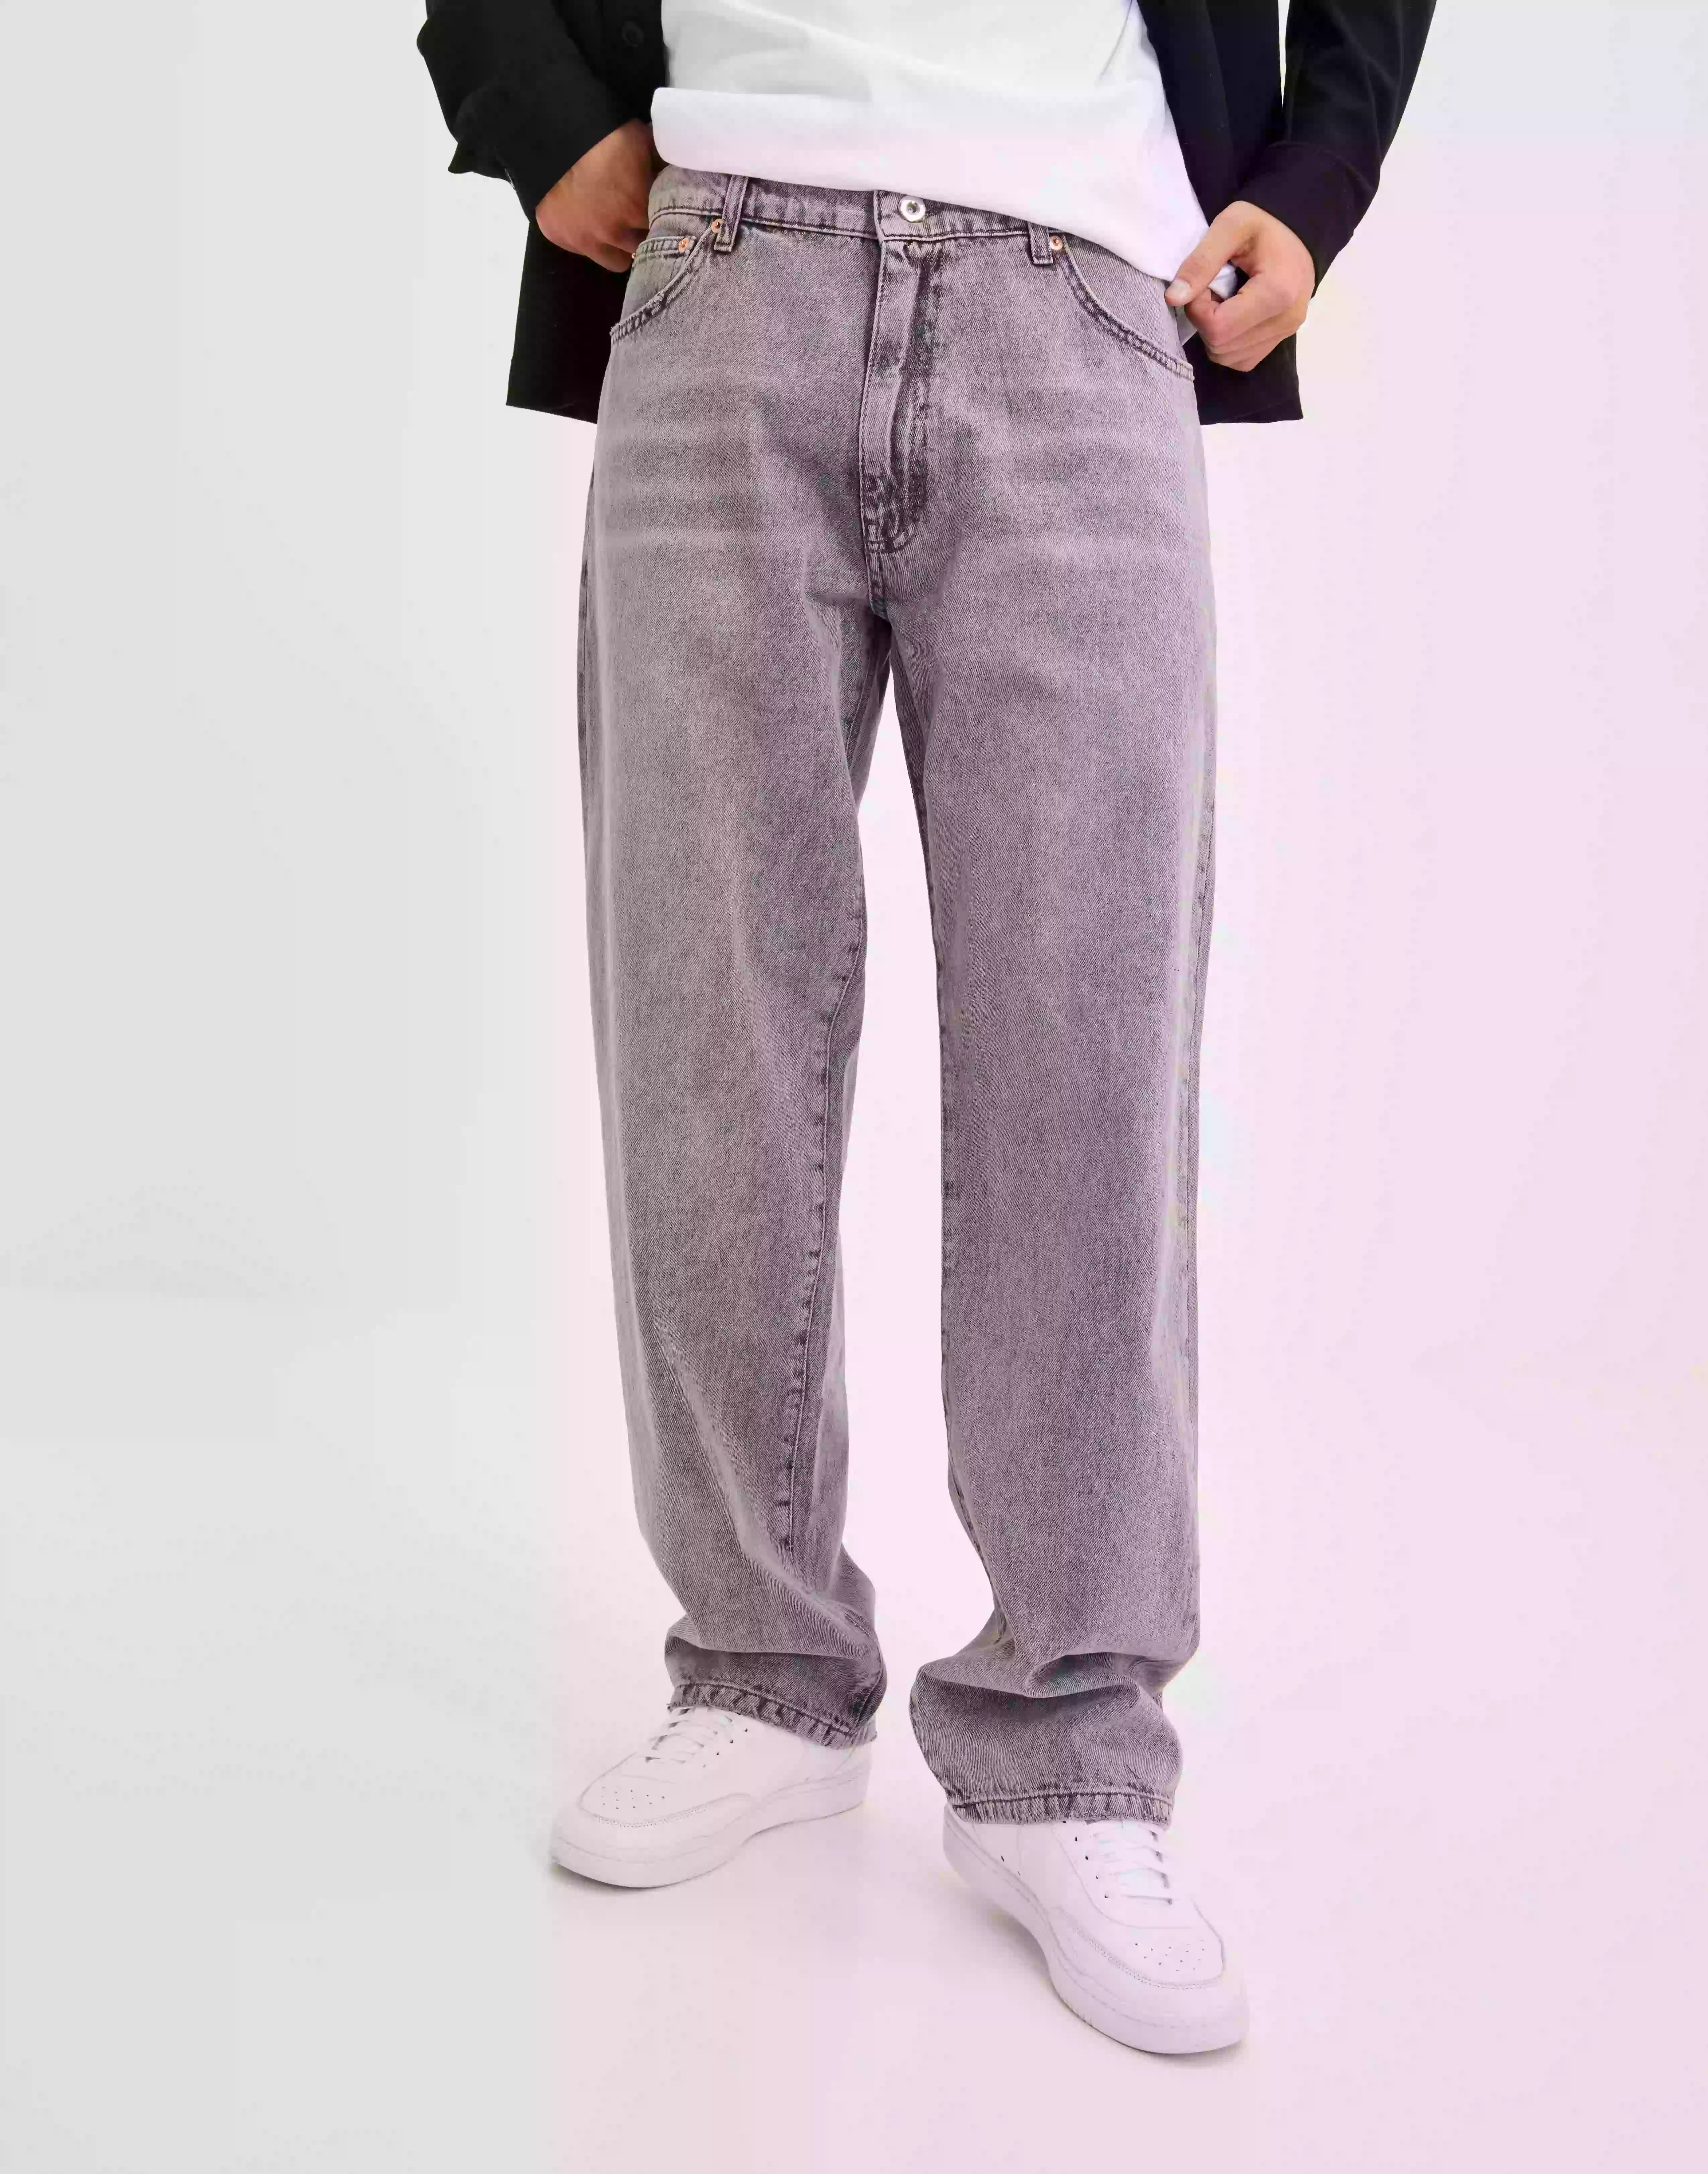 Woodbird Leroy Ash Grey Jeans Loose fit jeans Grey